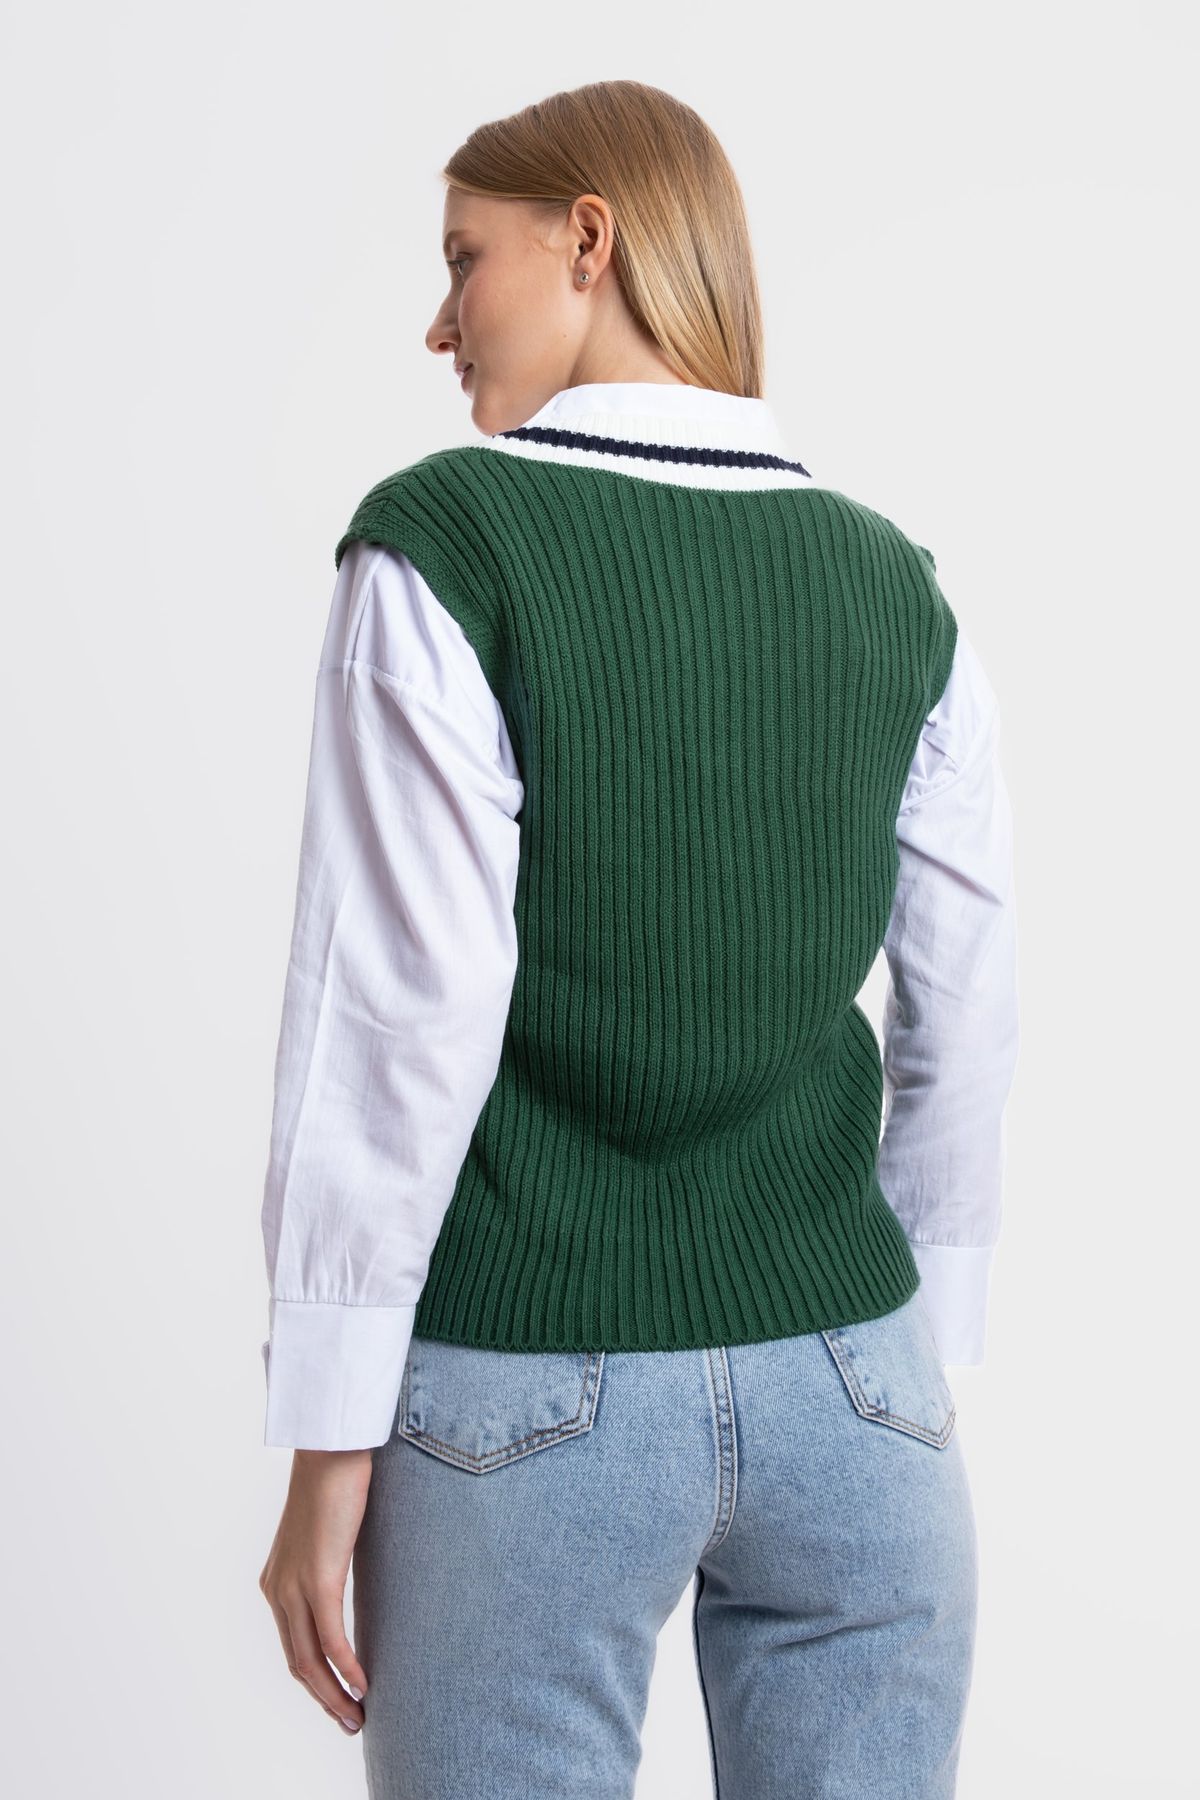 V Neck Detailed Sleeveless College Sweater